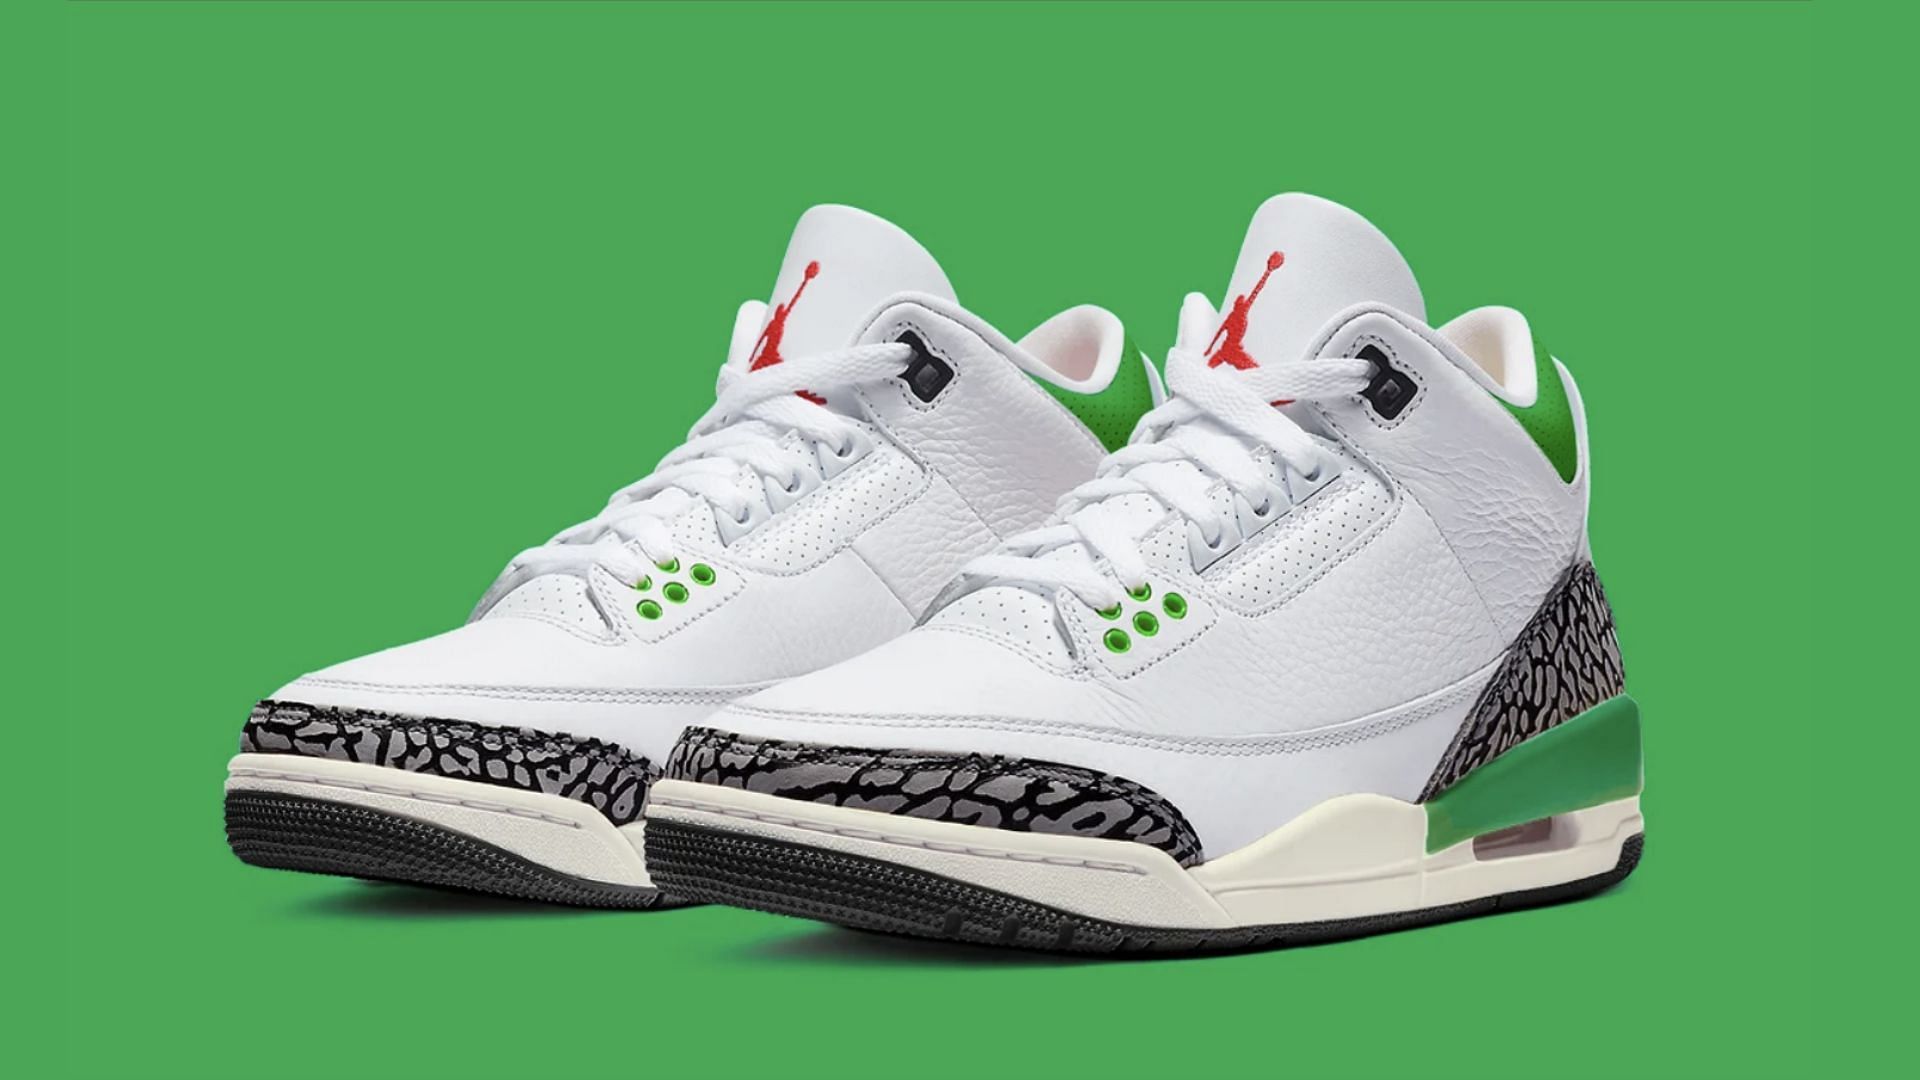 Nike Air Jordan 3 Lucky Green shoes (Image via Twitter/@houseofheat)